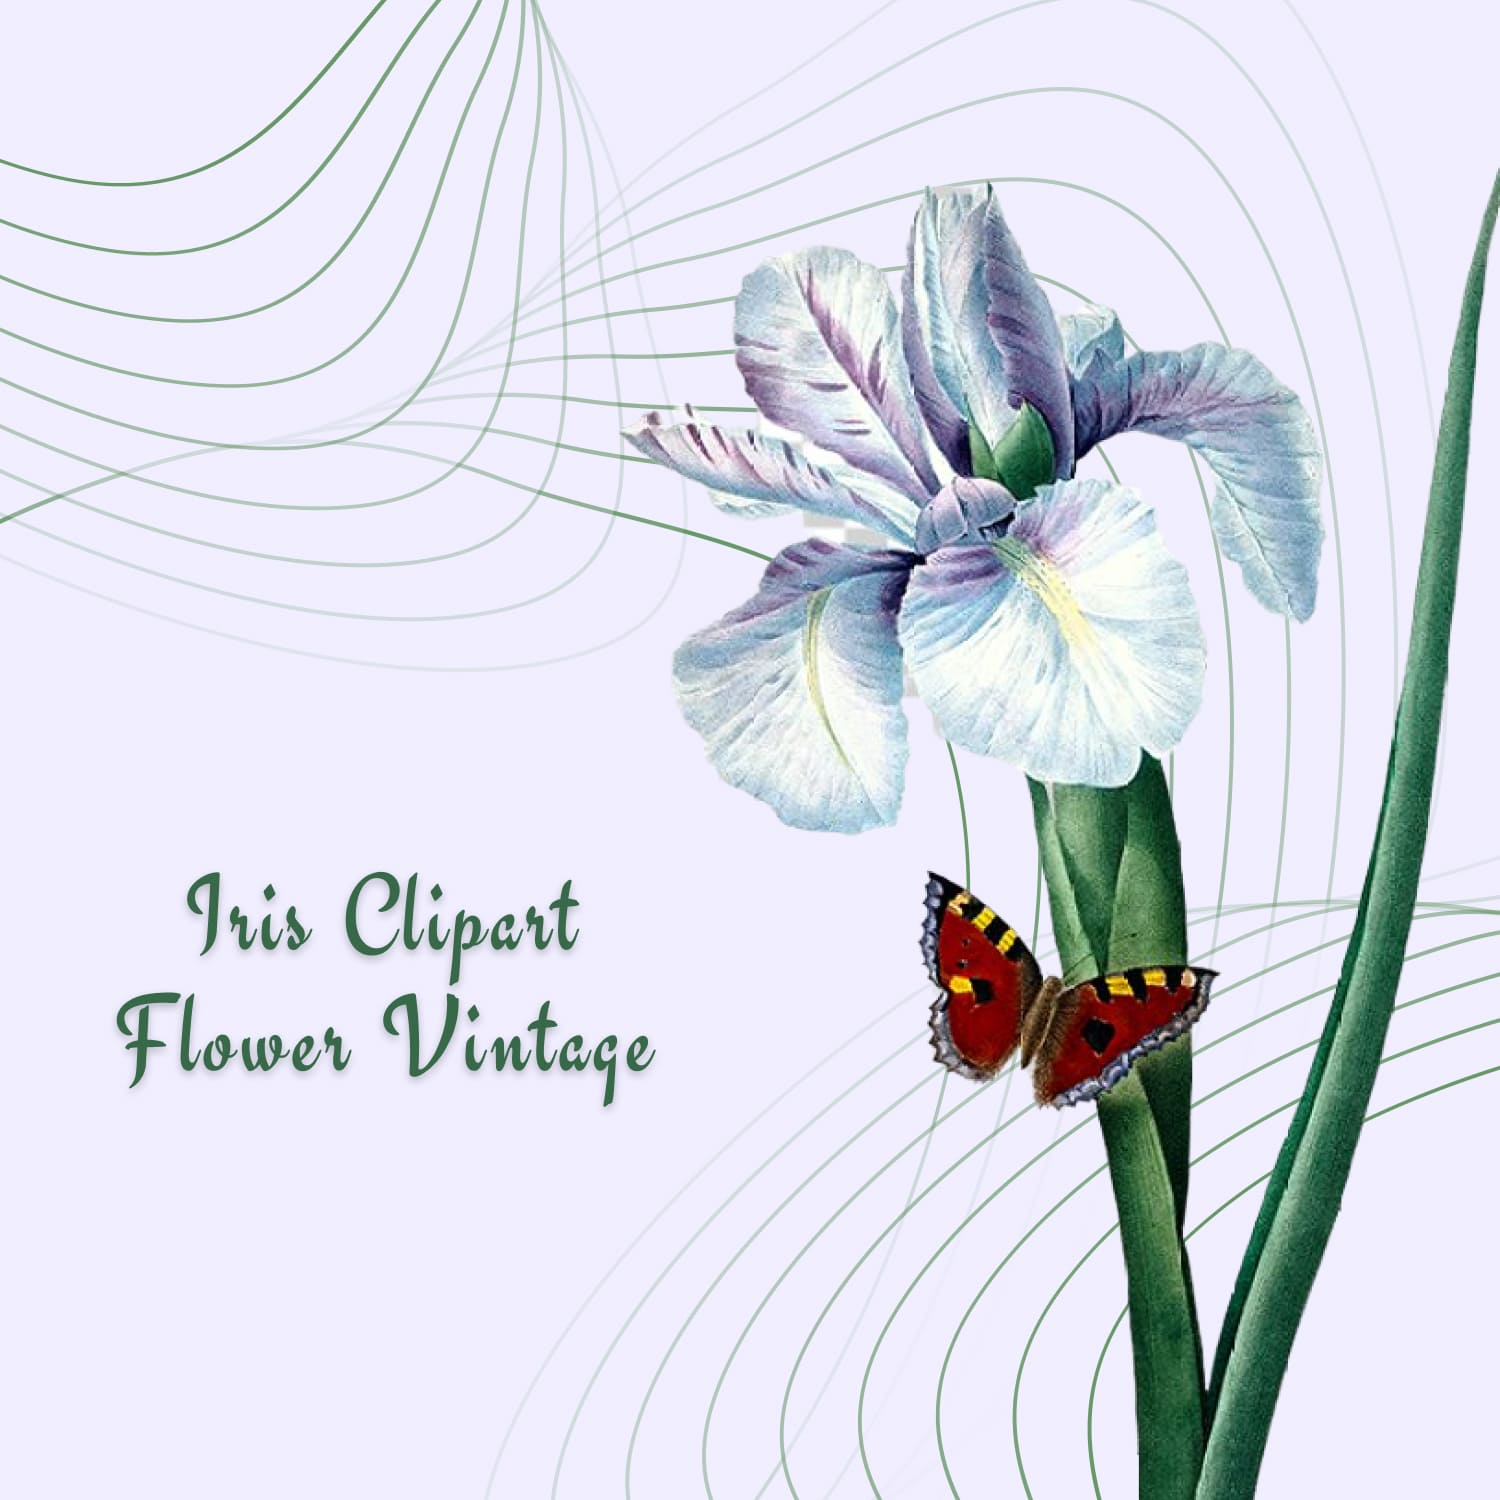 Iris Clipart Flower Vintage Watercolor Design cover image.